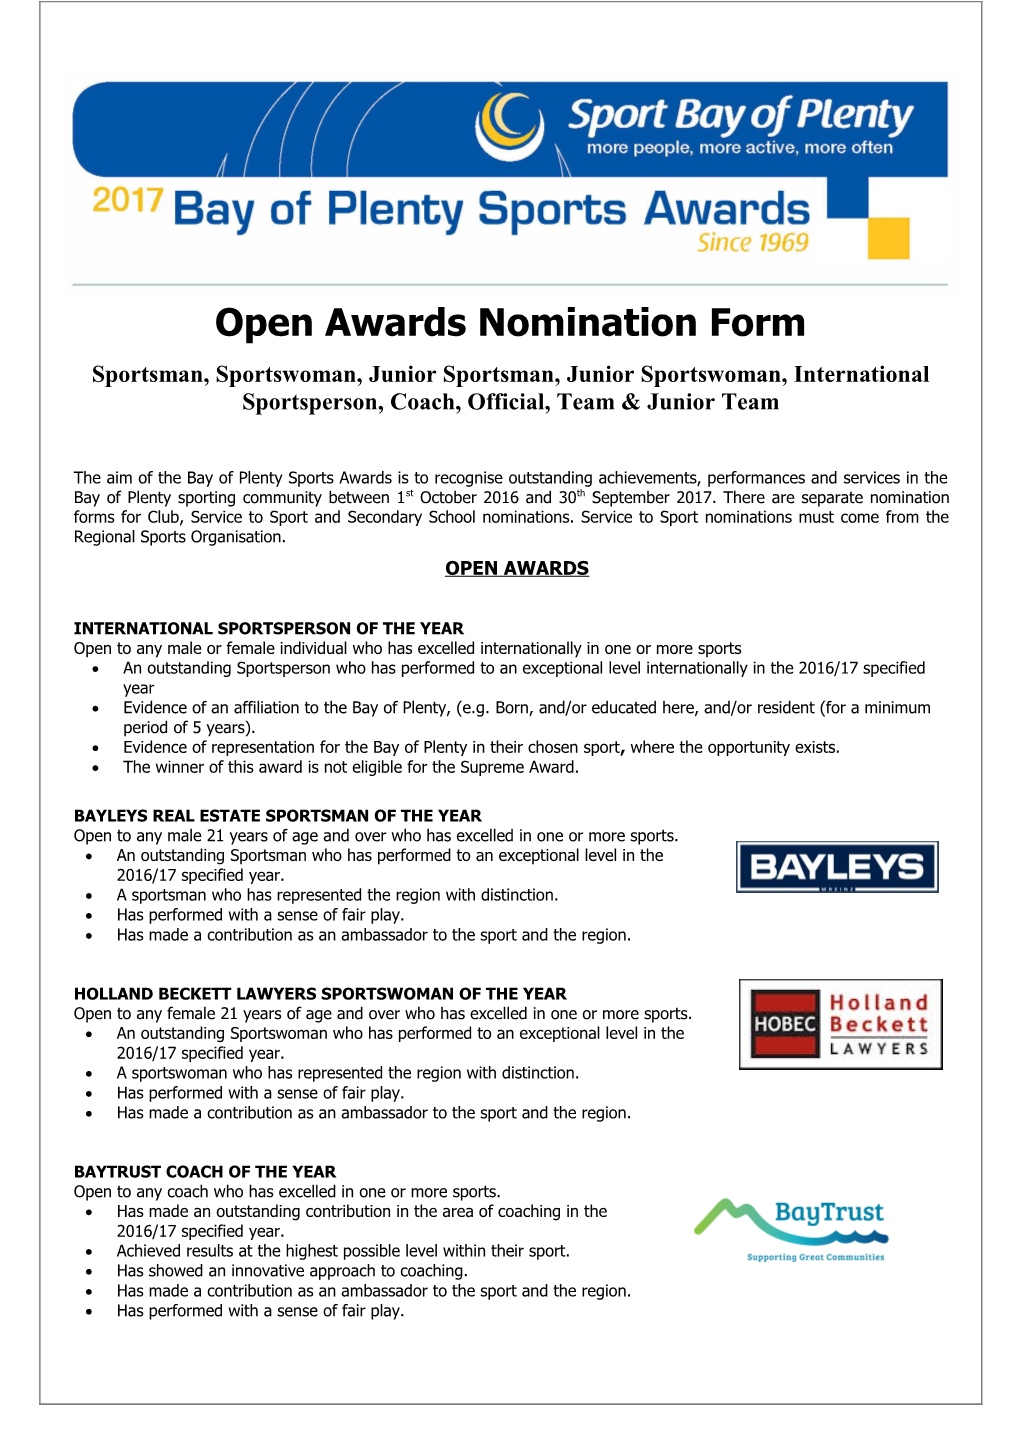 Open Awards Nomination Form